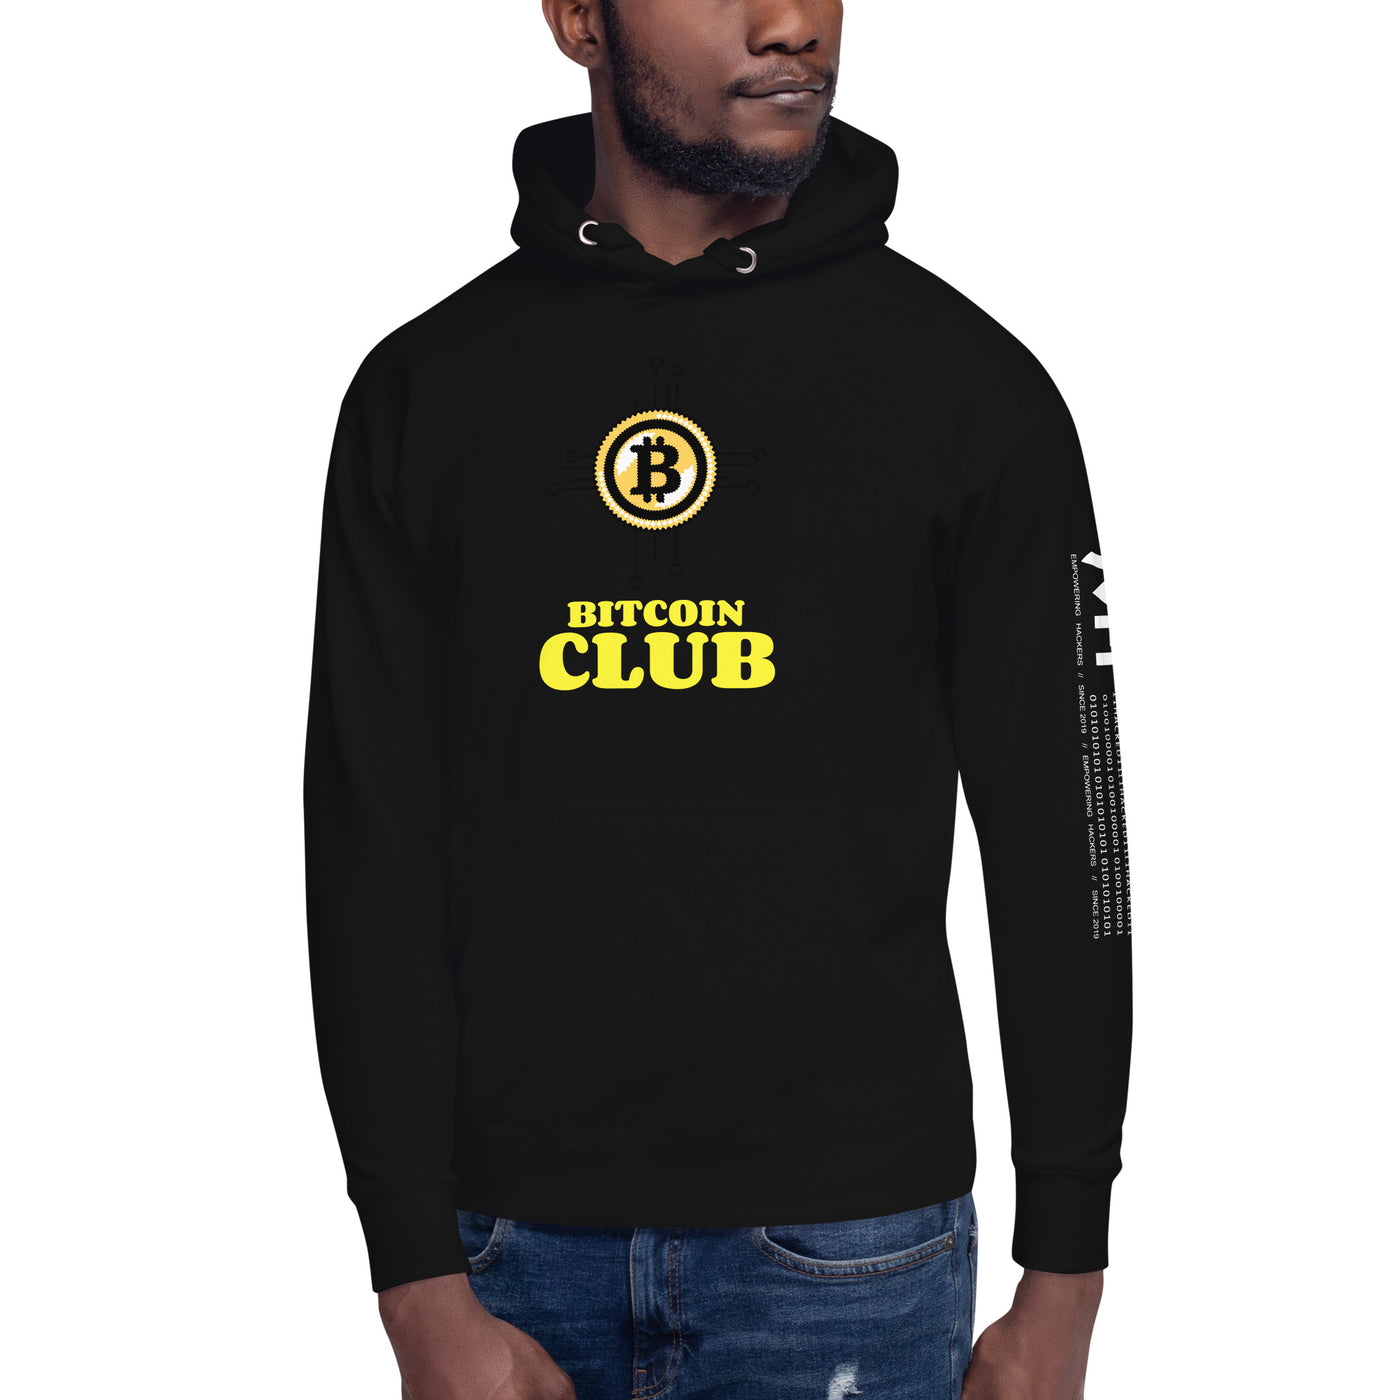 Bitcoin Club V6 - Unisex Hoodie